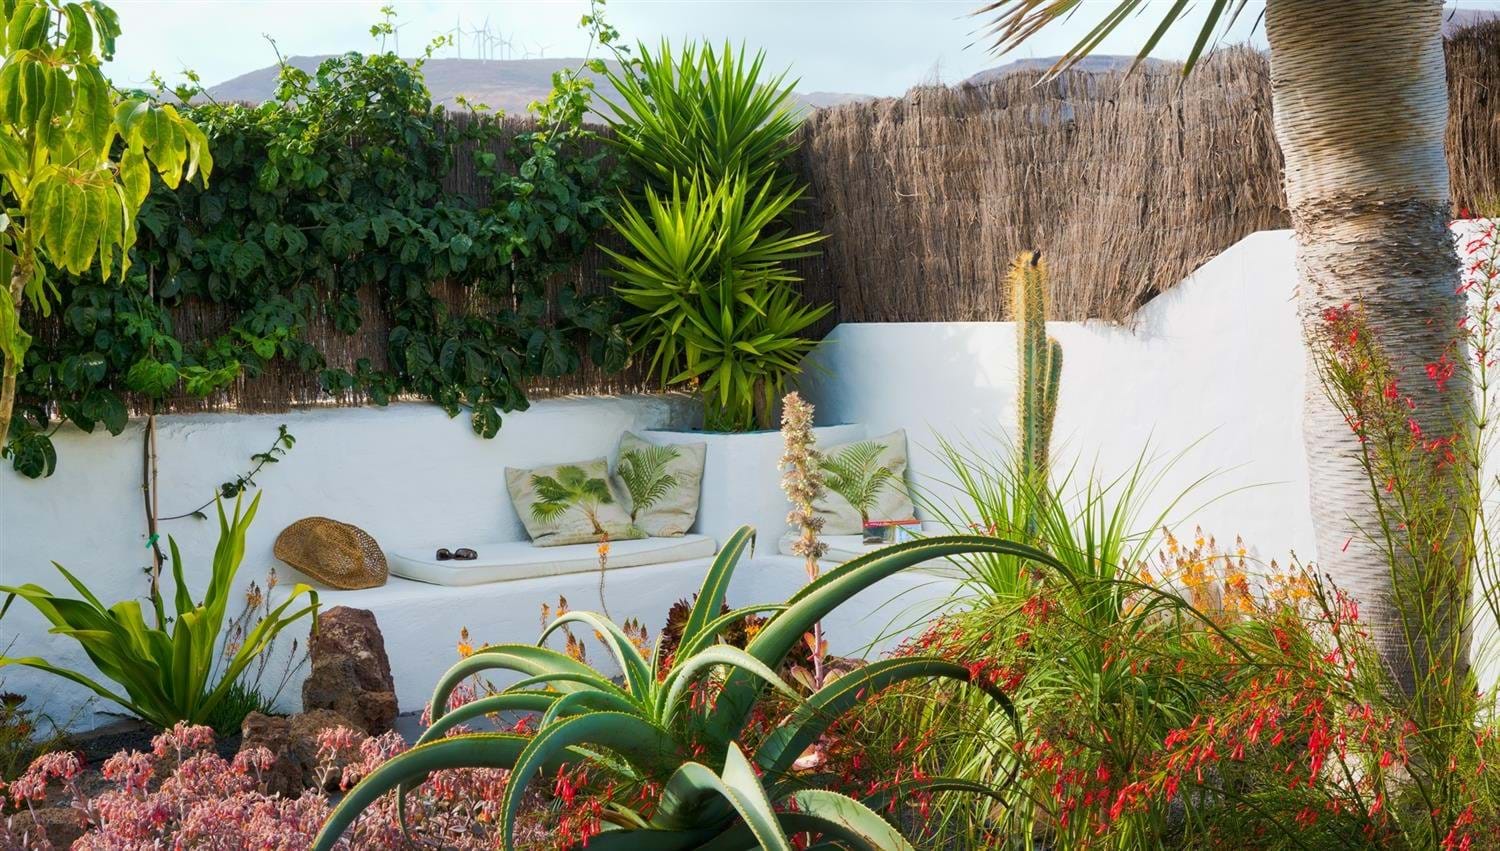 Sunny corner spot in the tropical garden at Finca Botanico in Lanzarote